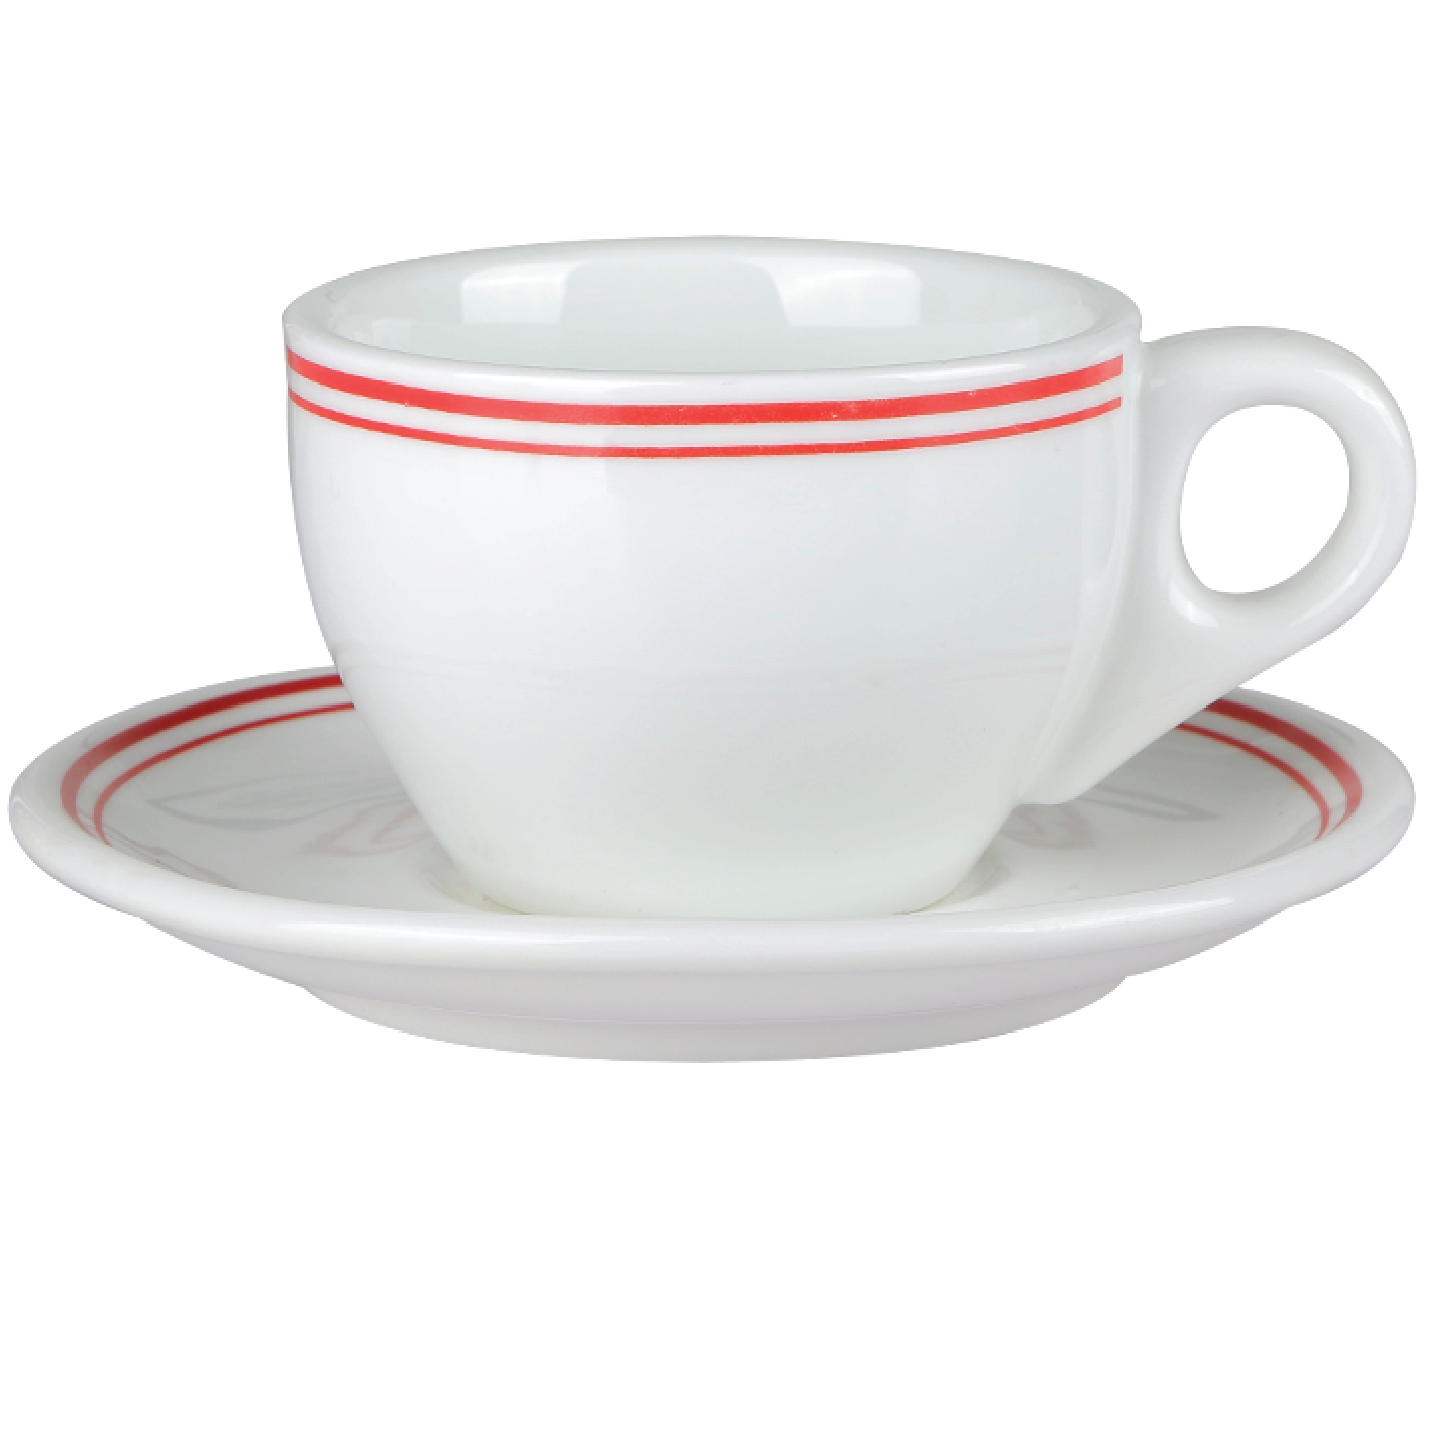 CLASSIC HONG KONG CAFE MILK TEA CUP SET 懷舊 港式奶茶杯碟套裝